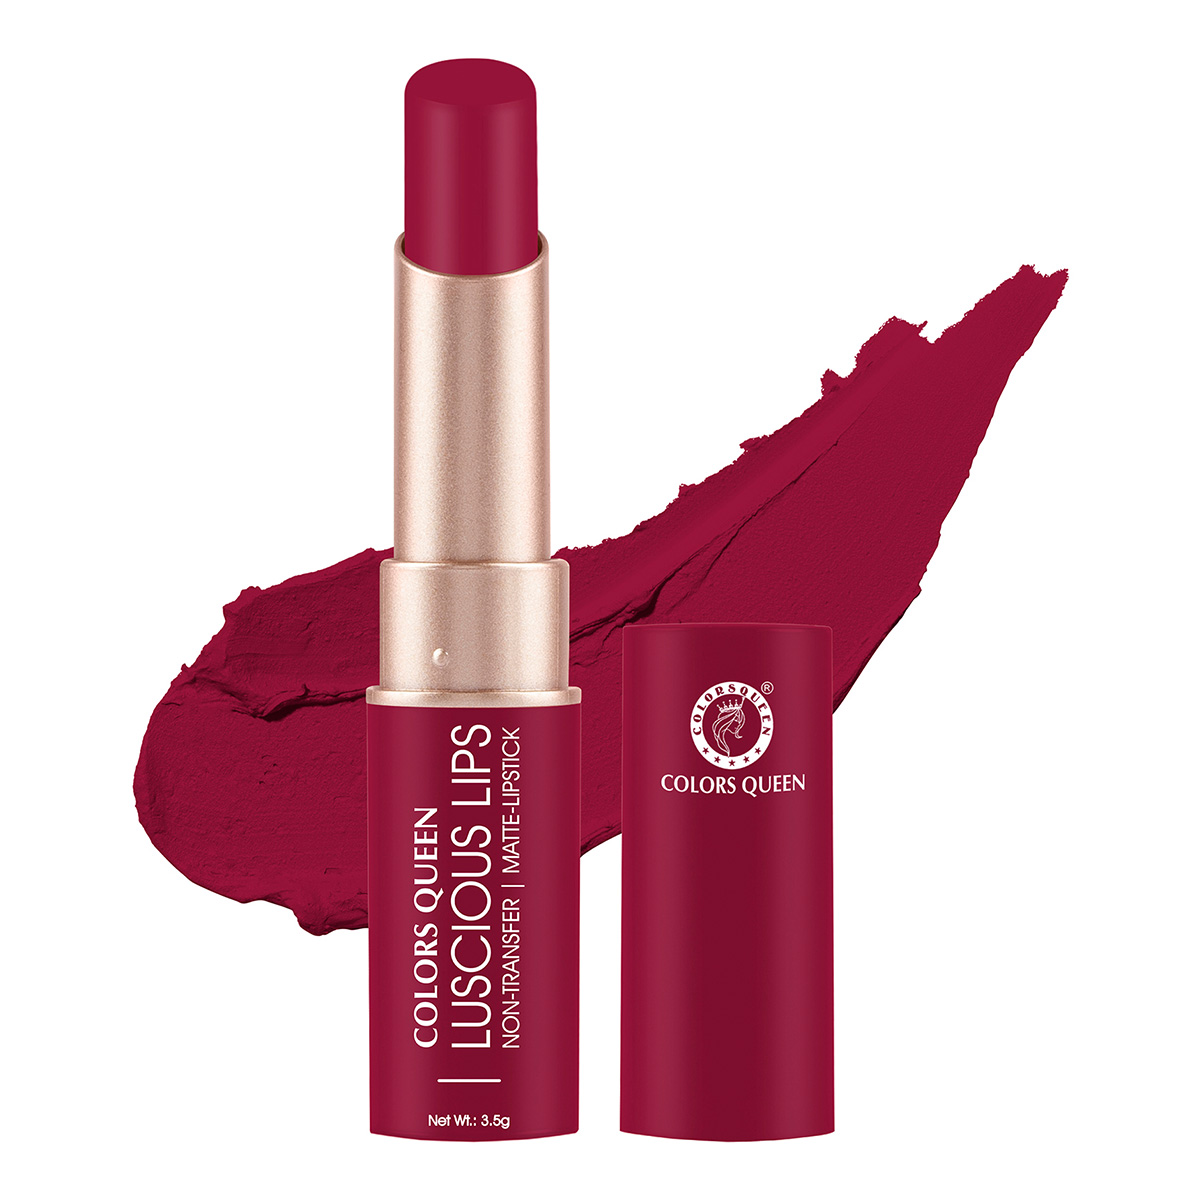 Colors Queen Luscious Lips Non Transfer Matte Lipstick - Cranberry, 3.5gm